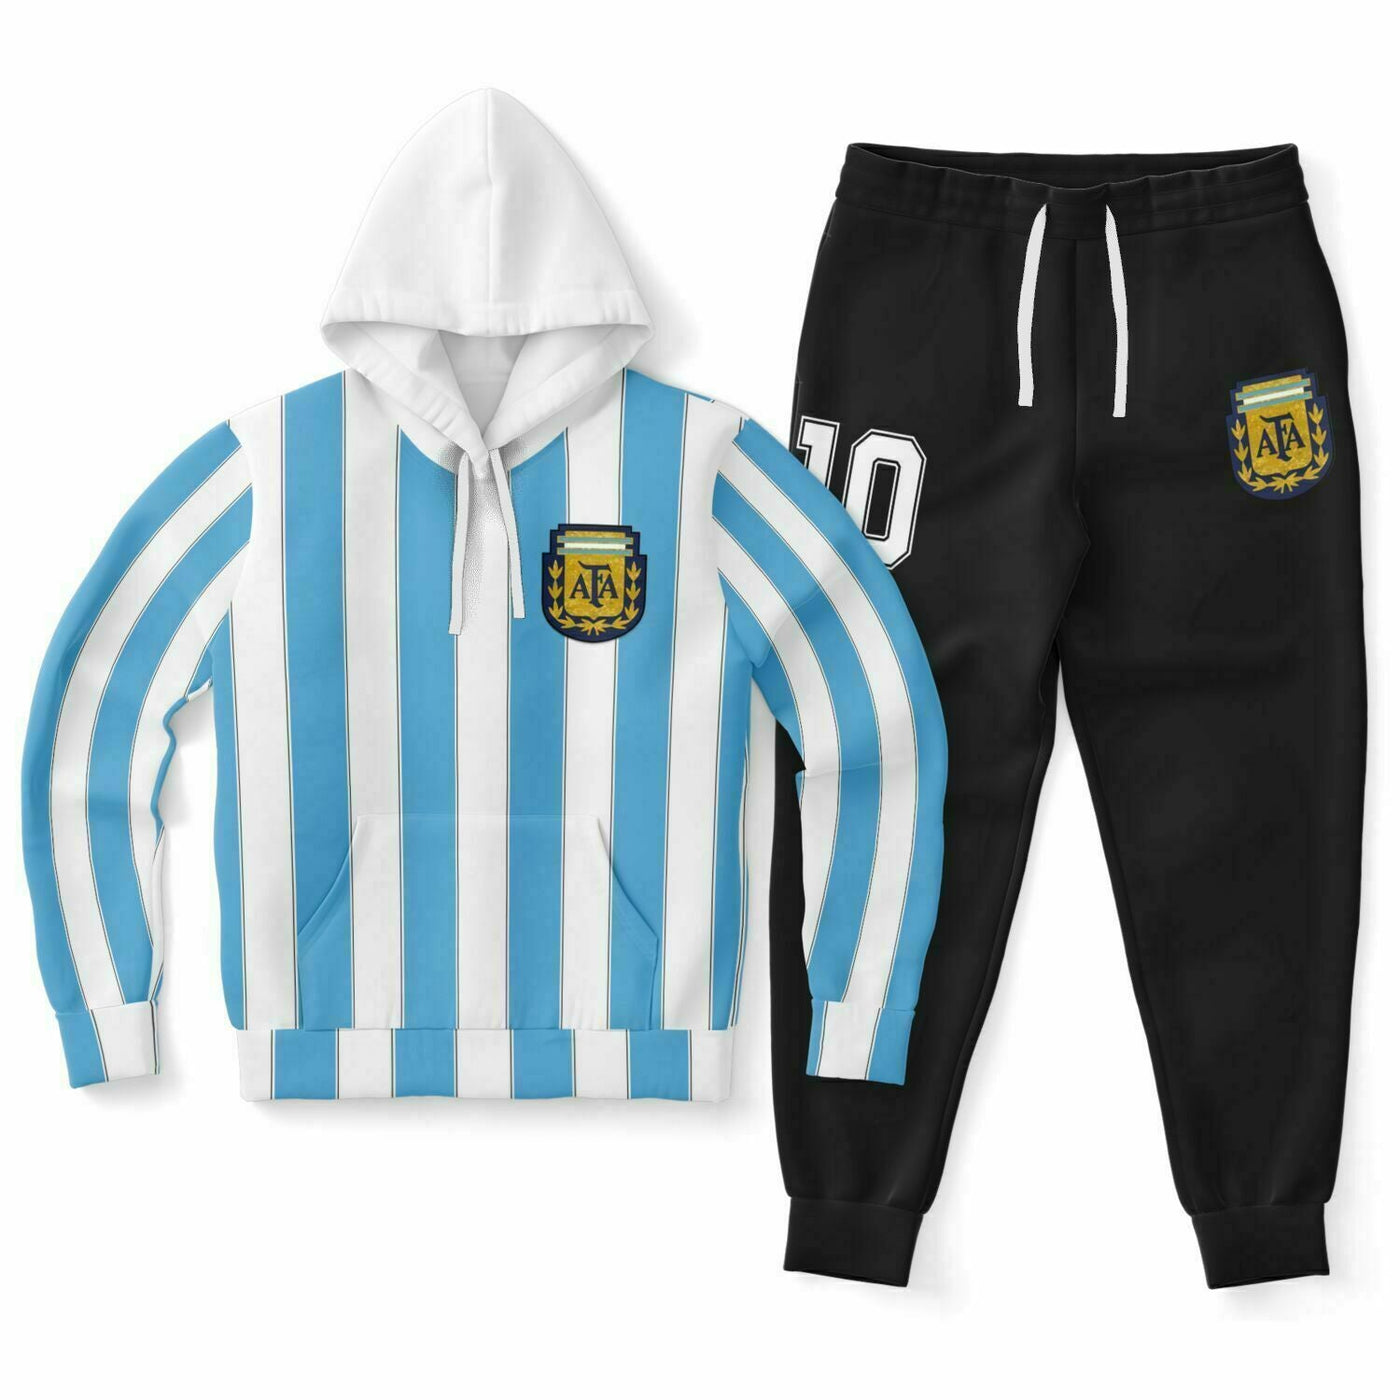 Maradona Tribute - Retro Argentina soccer Jersey N. 10 | Fashion Hoodie And Joggers Set